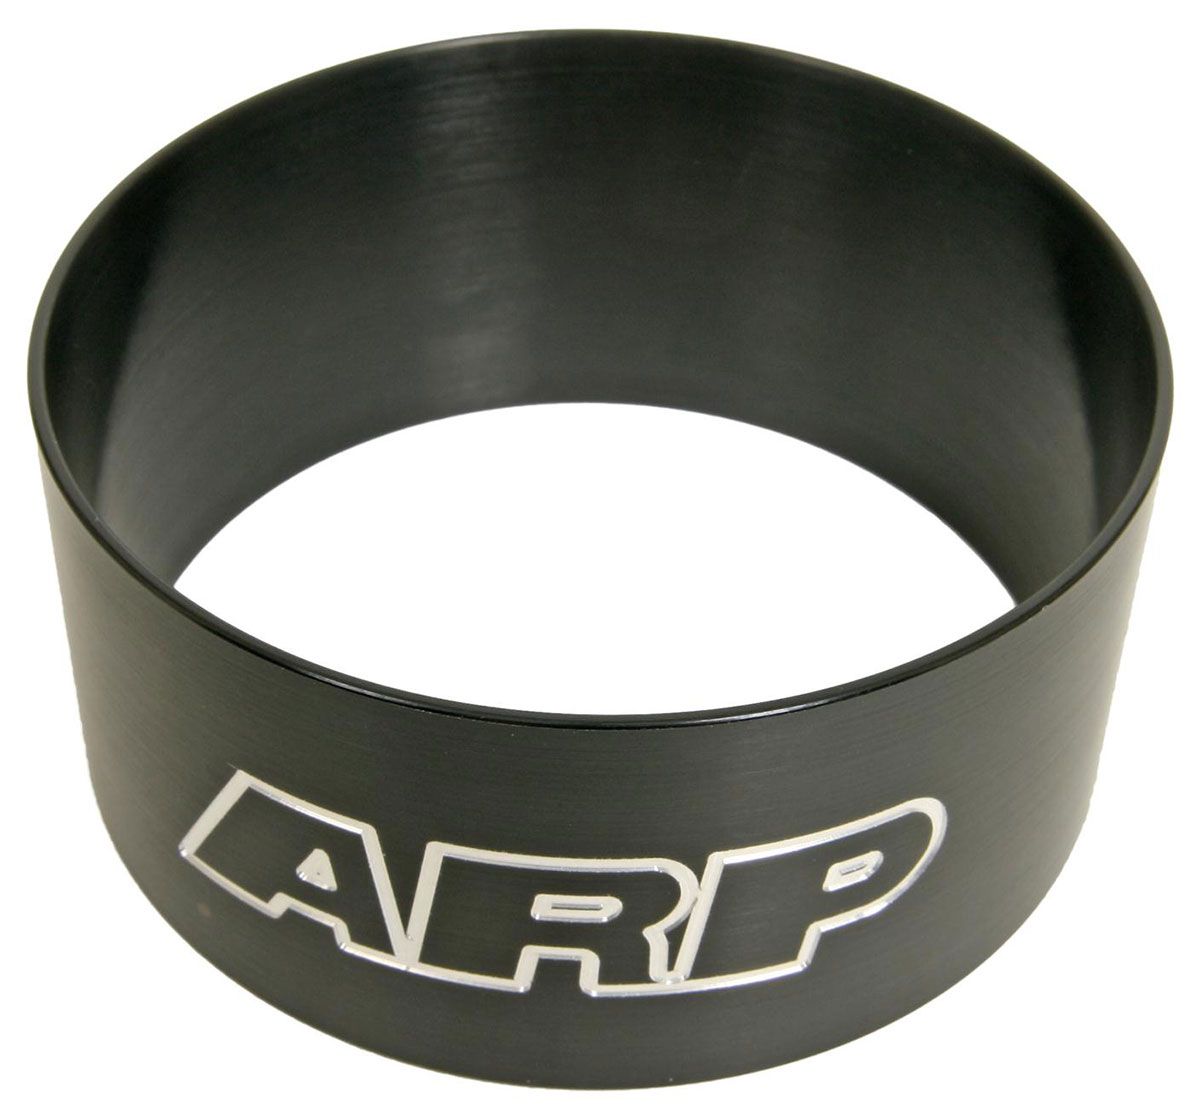 AR901-8700 - ARP RING COMPRESSOR 87.00 MM